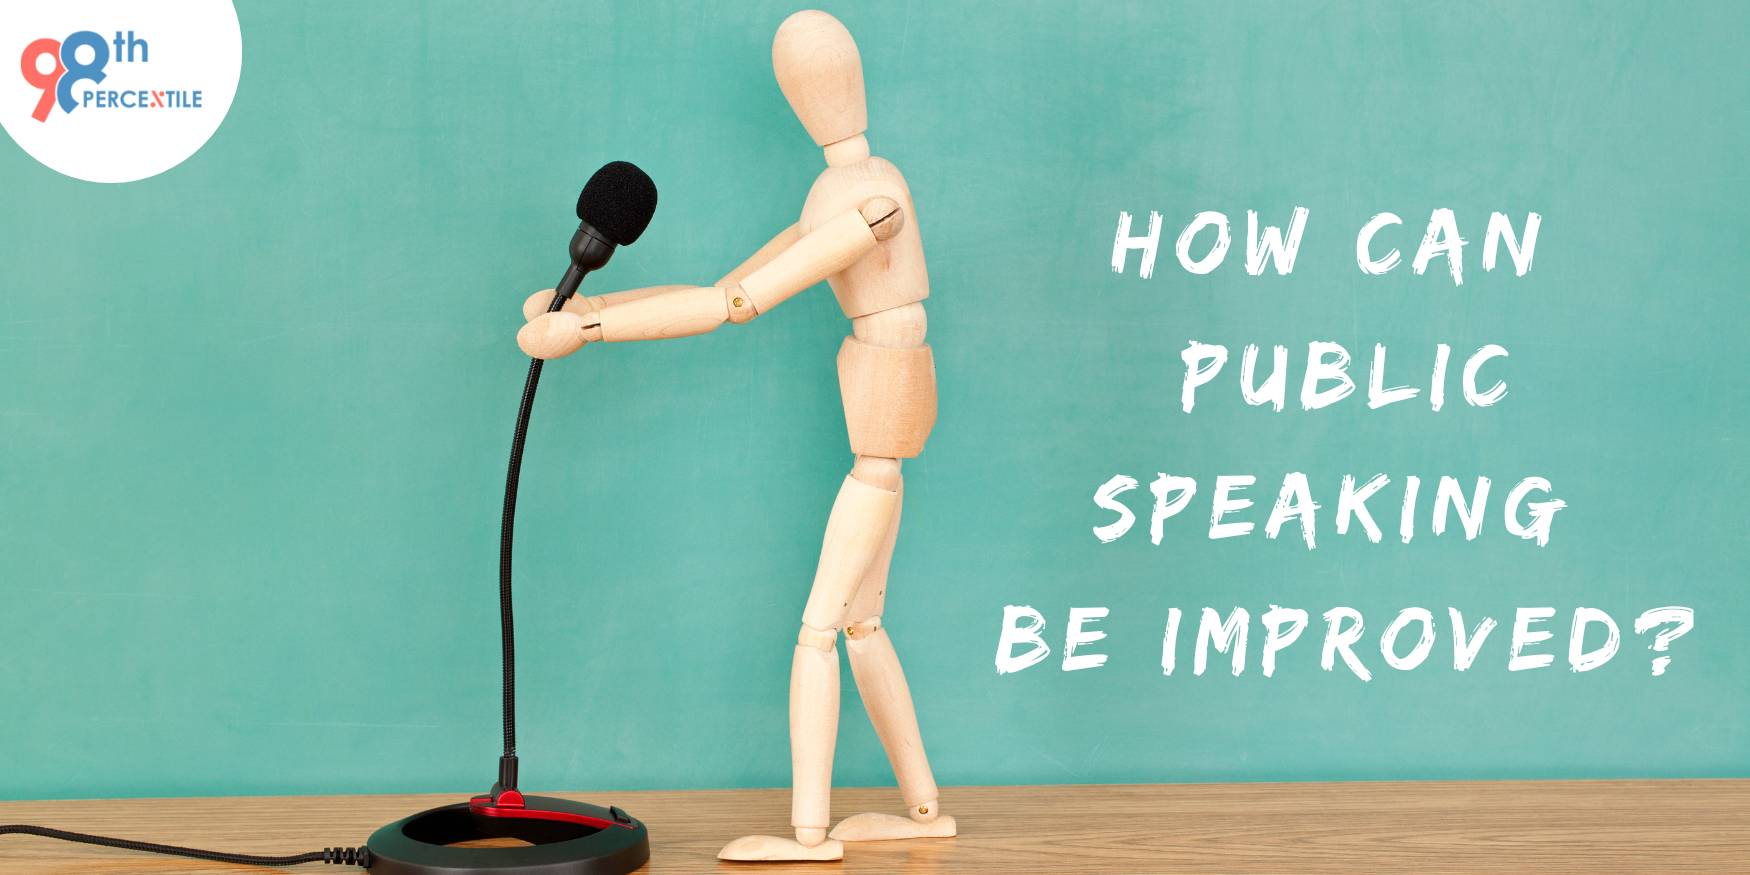 How Can I Improve Public Speaking Myself?